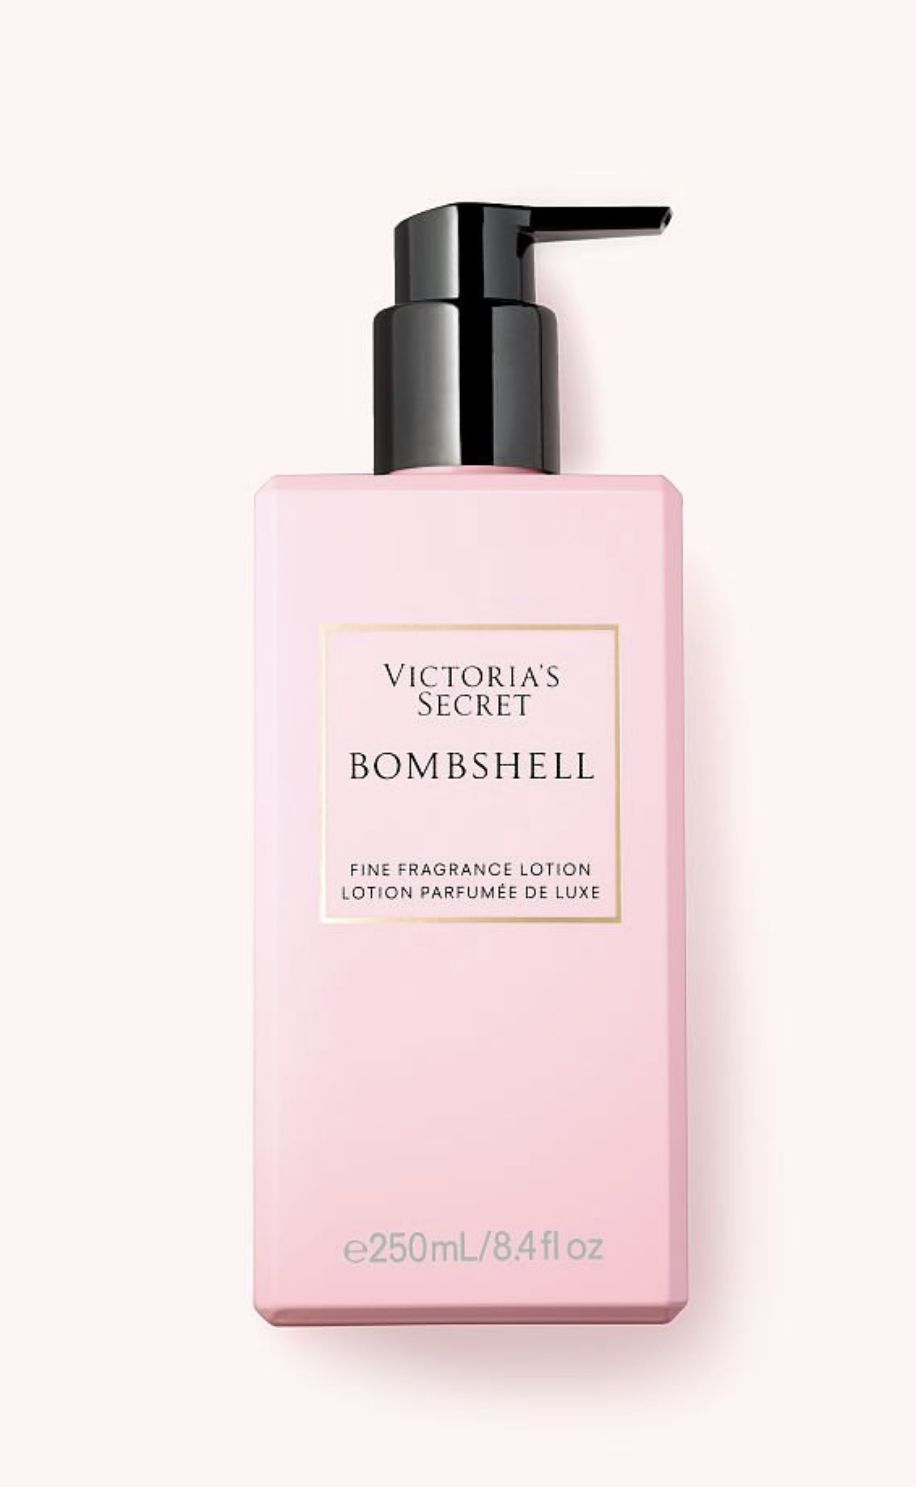 Victoria's Secret Bombshell Fragrance Lotion - Consumos da Martina